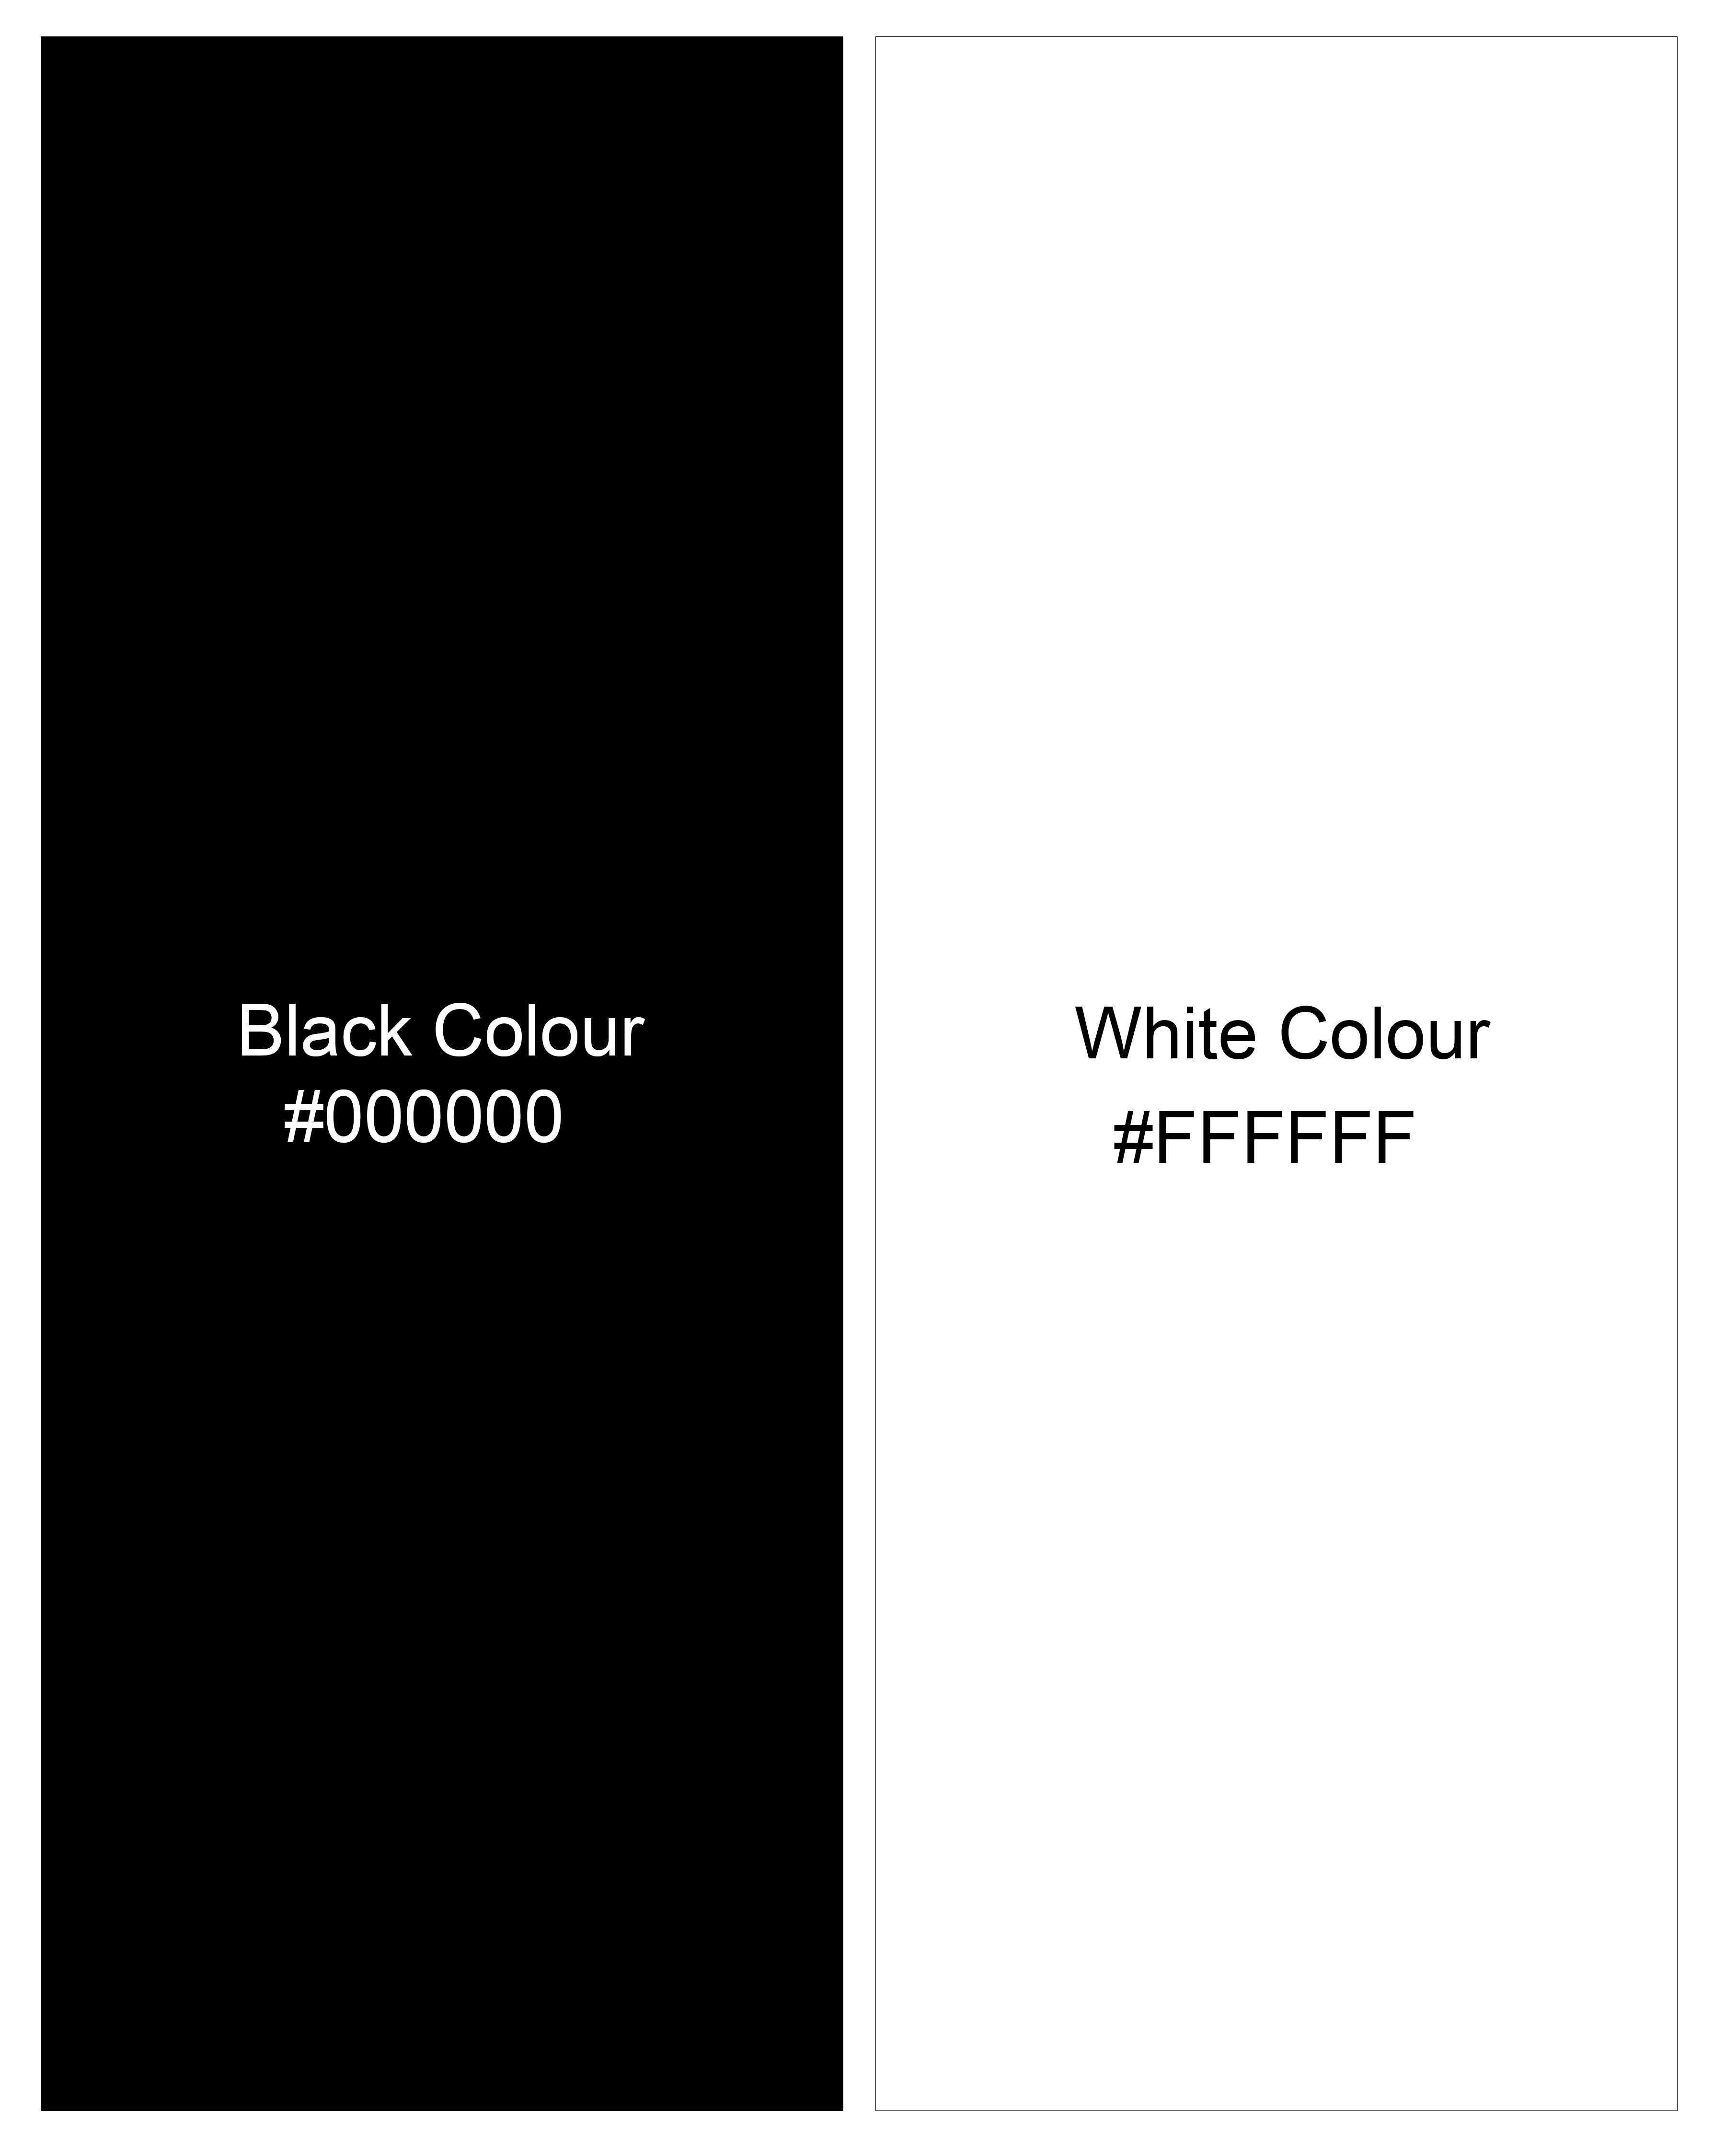 Bright White and Black Checkered Premium Cotton Crop Top WTP011-32, WTP011-34, WTP011-36, WTP011-38, WTP011-40, WTP011-42